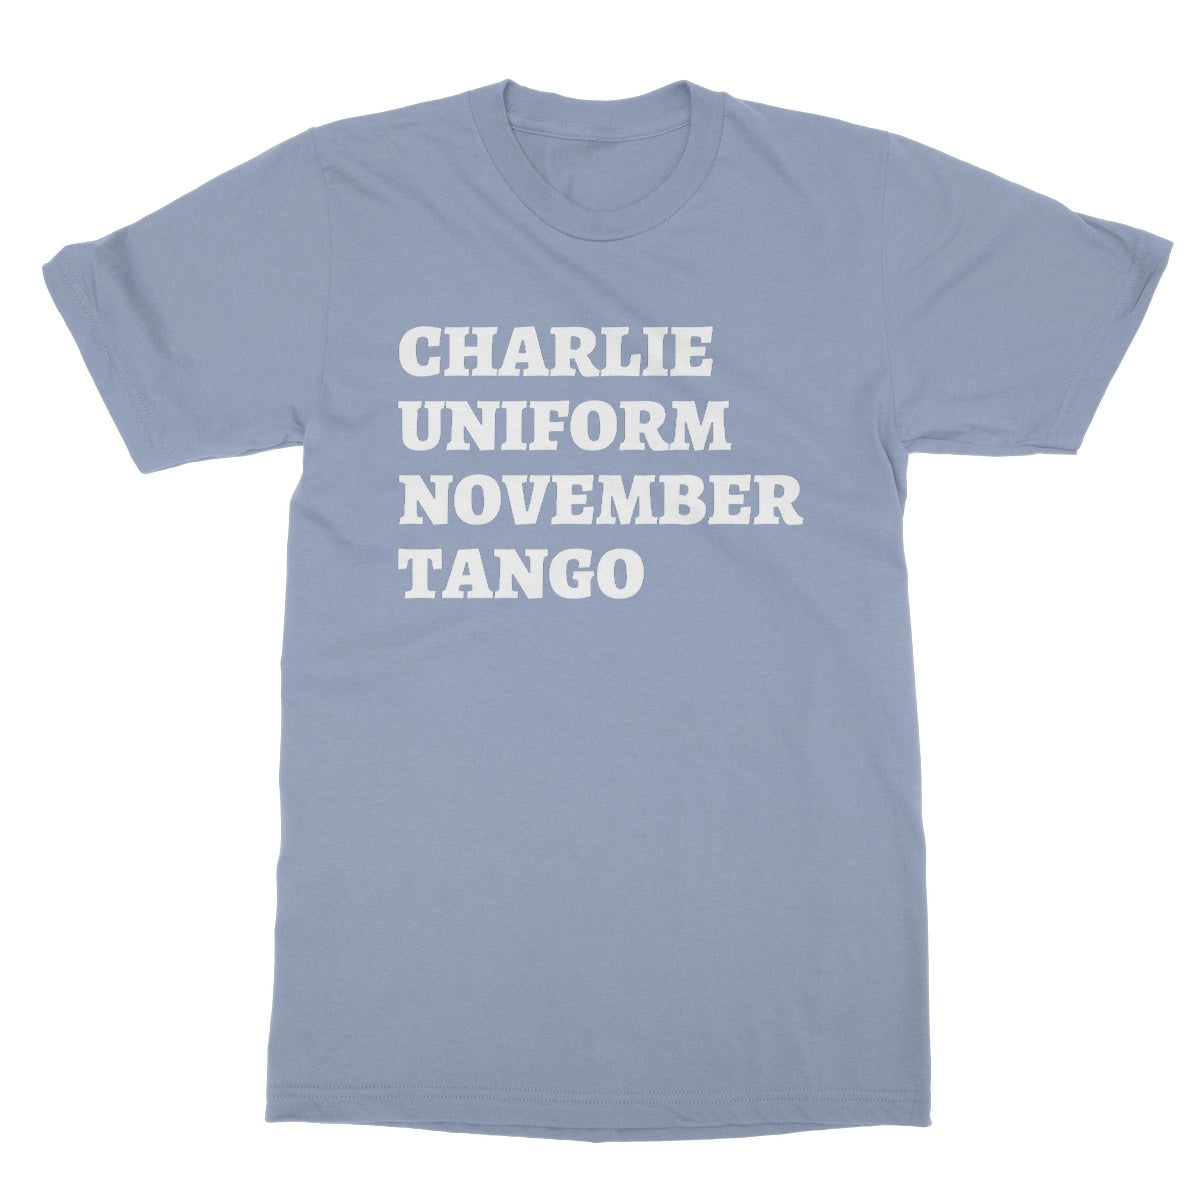 charlie uniform november tango t shirt blue